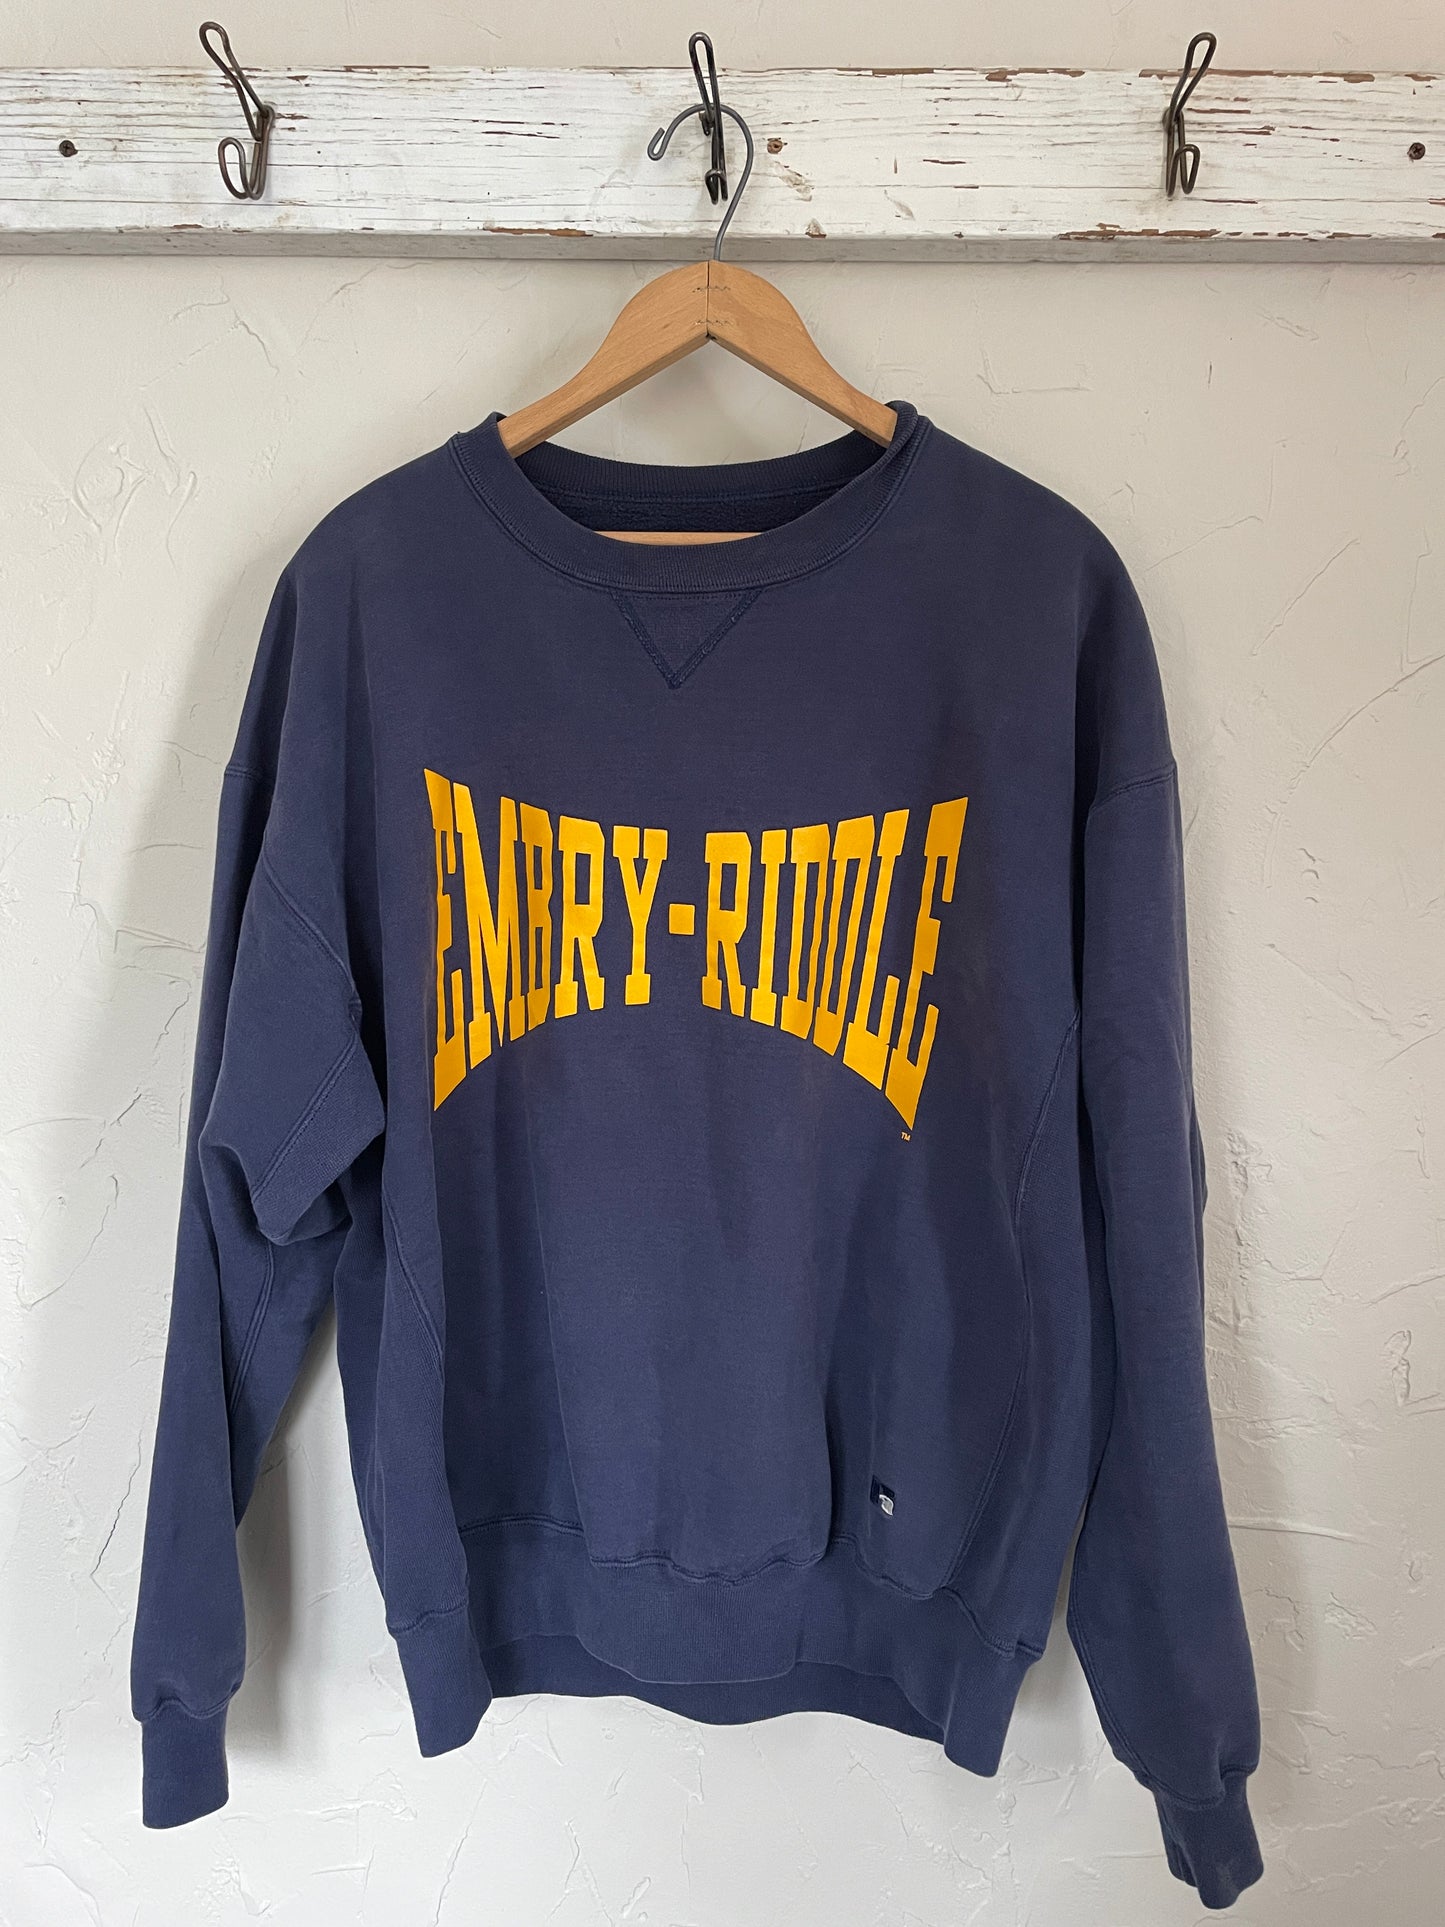 90s Embry-Riddle Sweatshirt